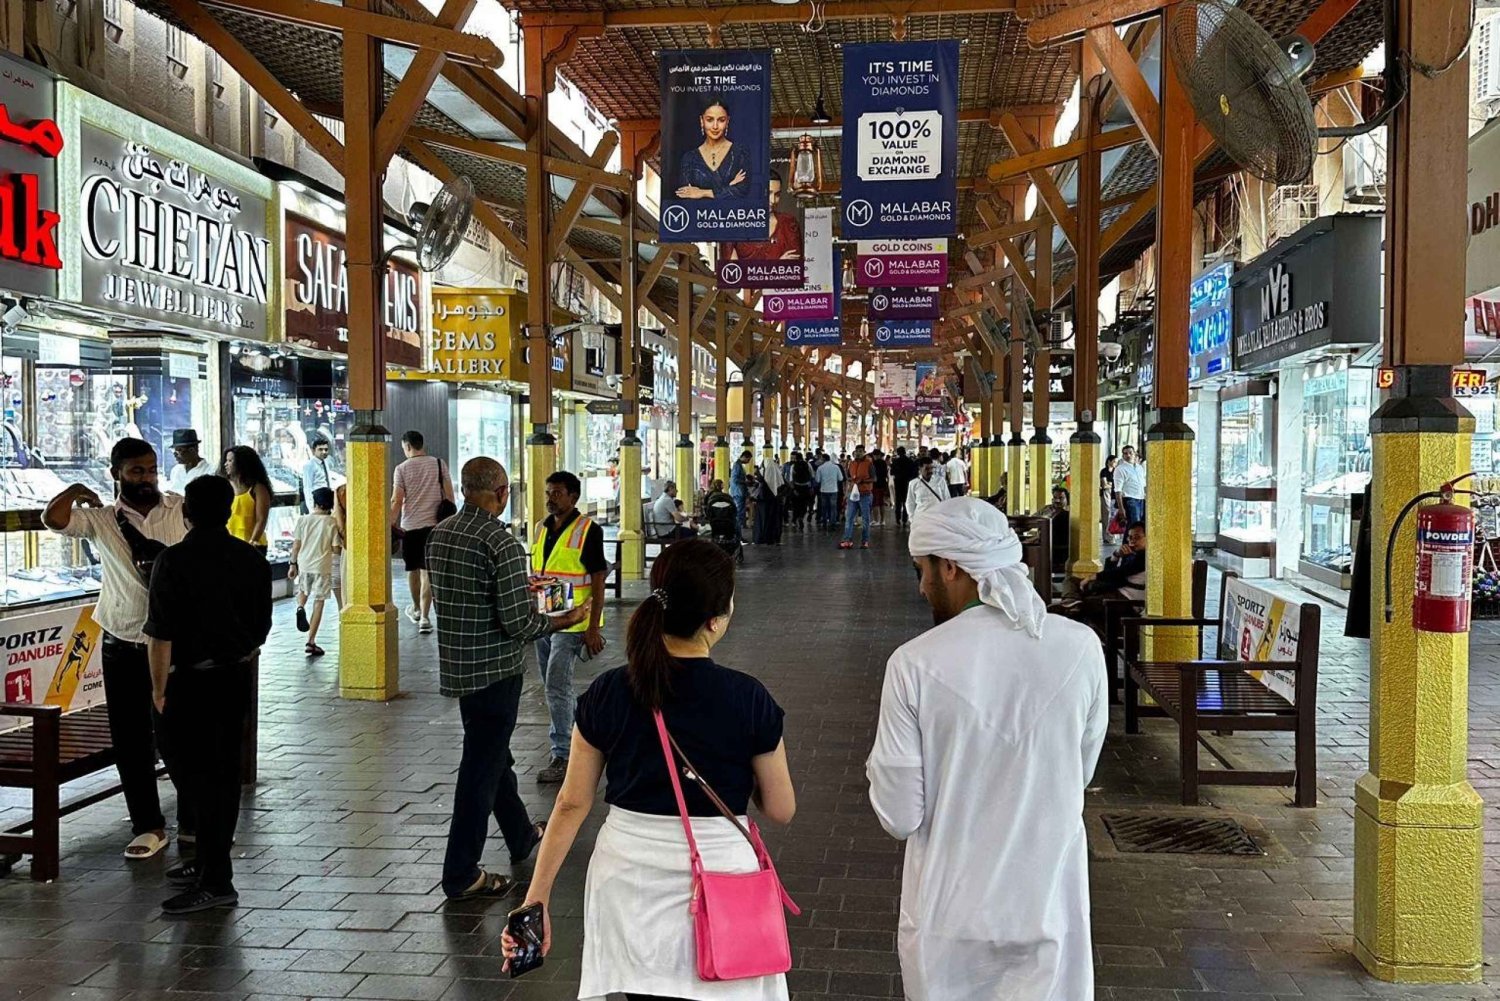 Walking Tour in Dubai. Souks, museums, Local Food Testing